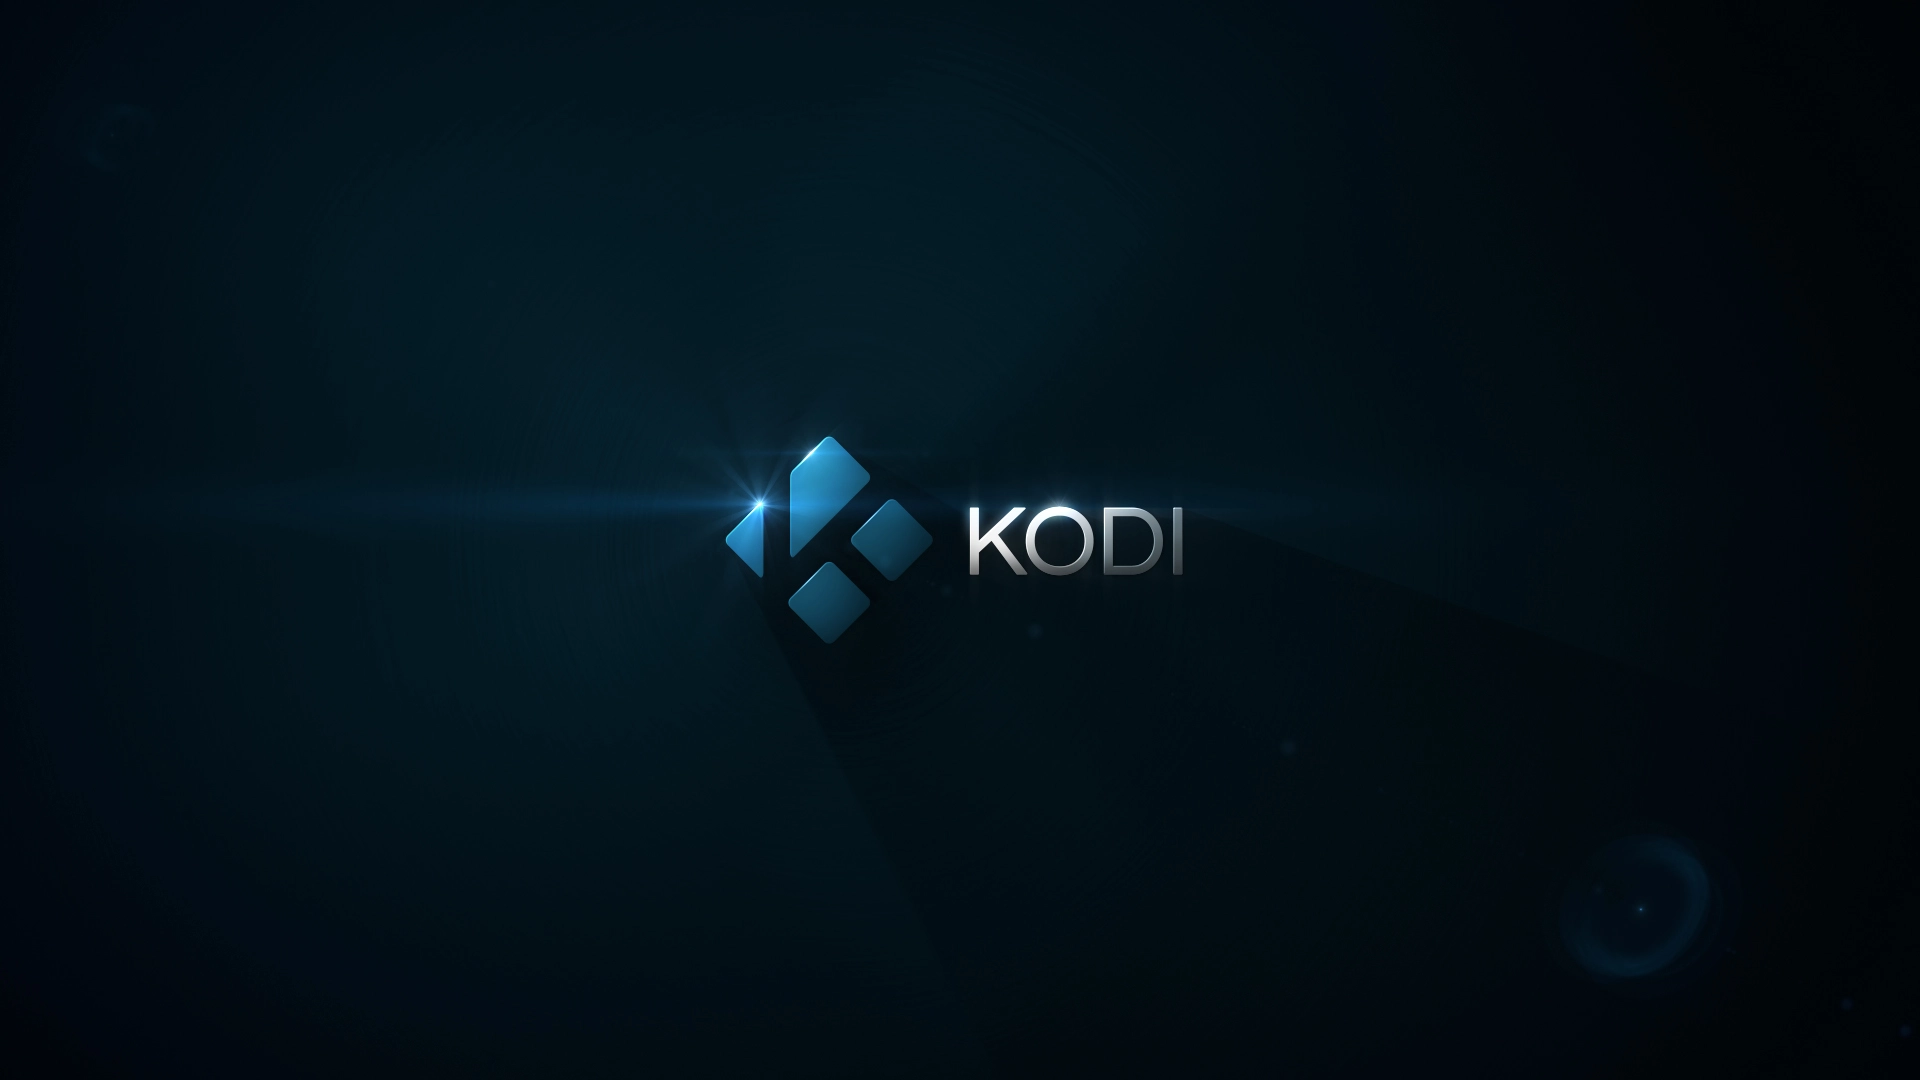 Kodi-Wallpaper-3A-1080p_samfisher